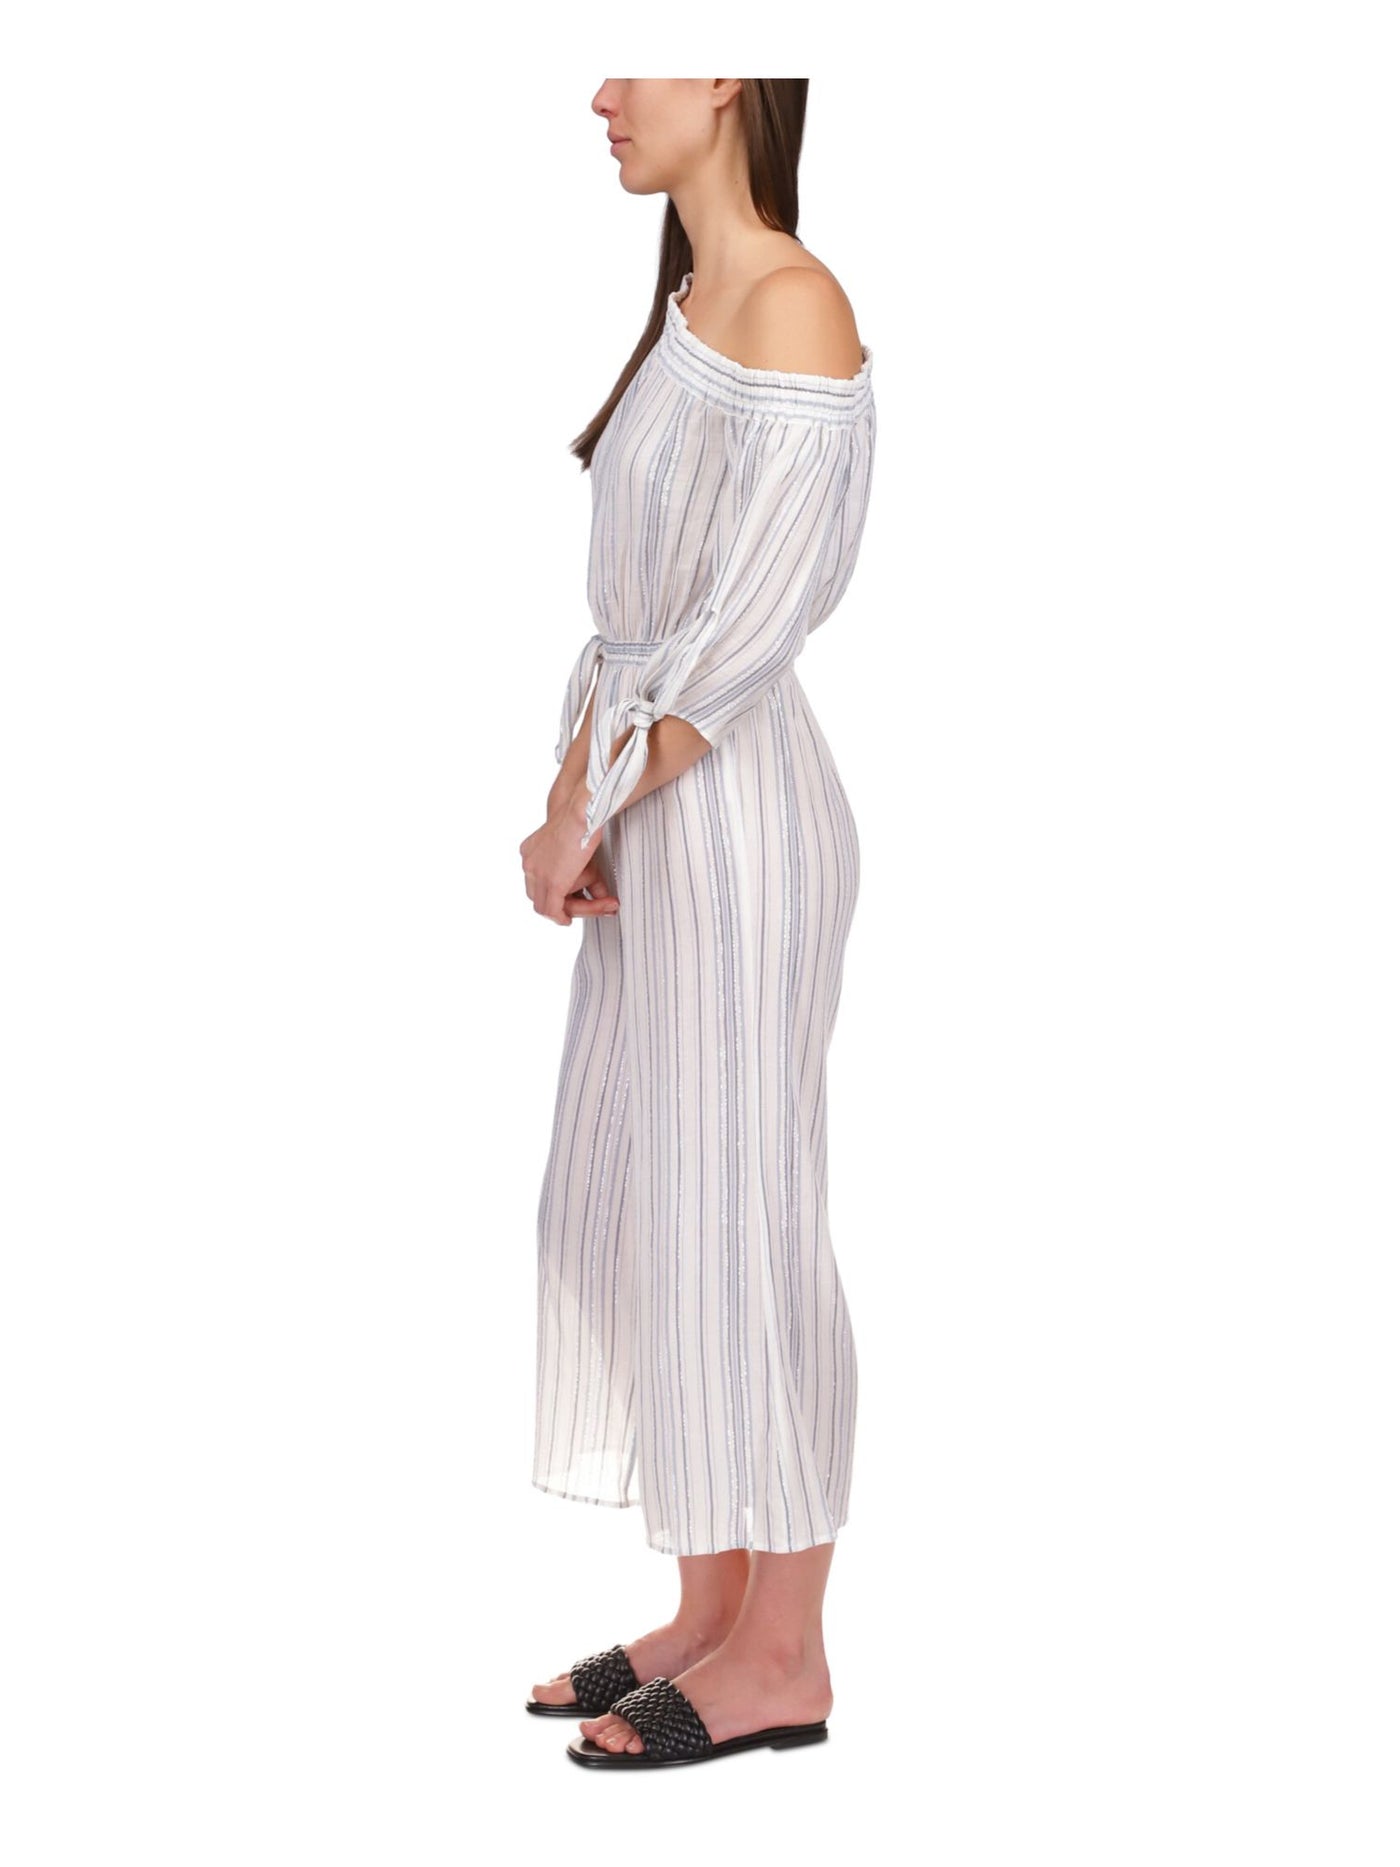 MICHAEL KORS Womens White Striped Asymmetrical Neckline High Waist Jumpsuit XS